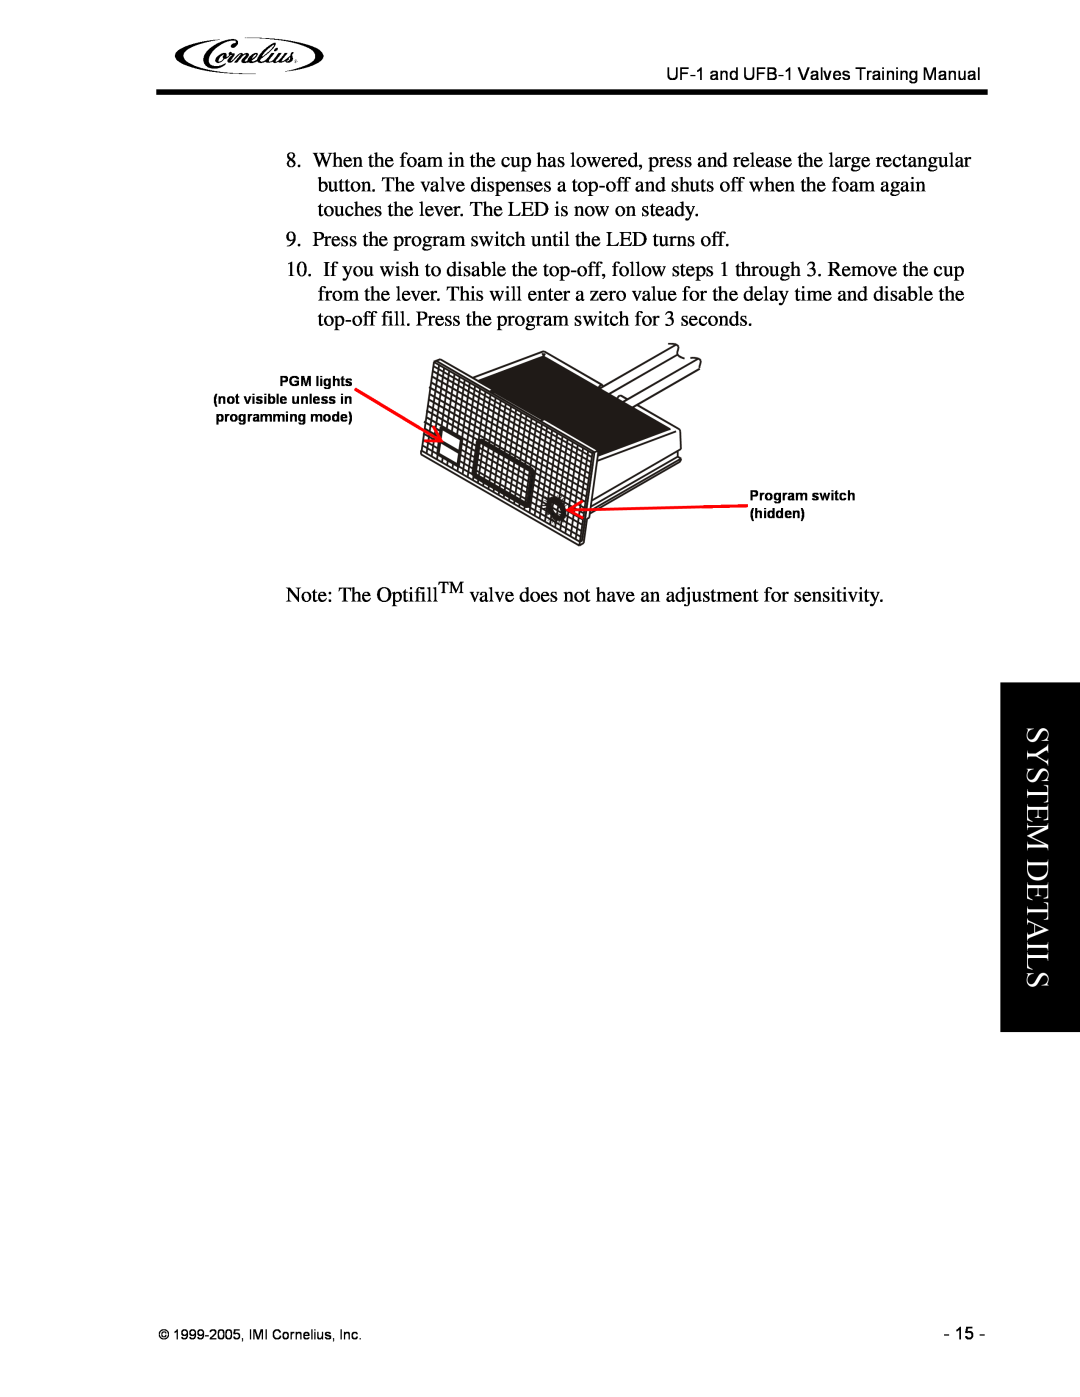 Cornelius manual System Details, UF-1and UFB-1Valves Training Manual, Program switch hidden 